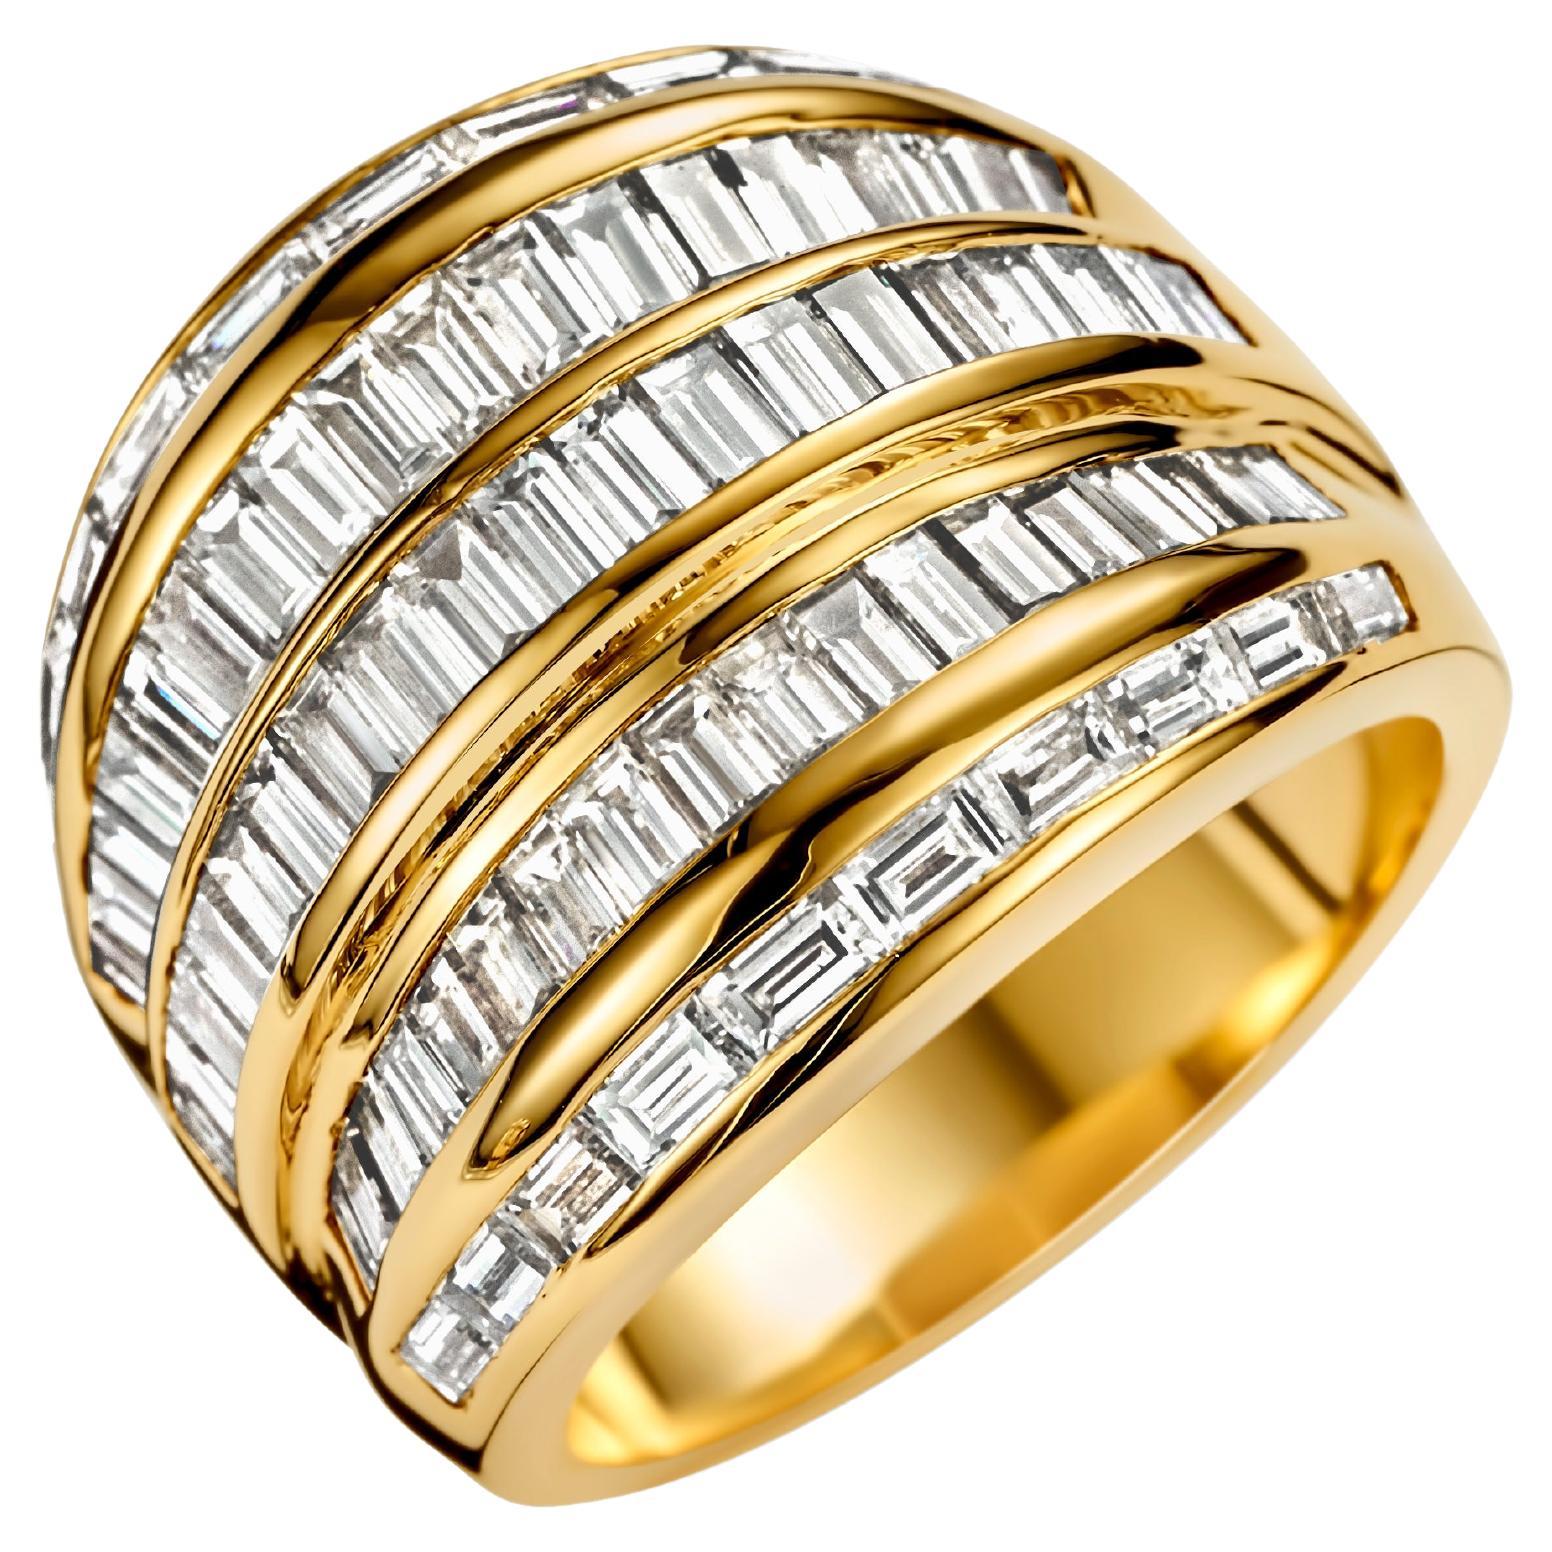 18kt Yellow Gold Ring 4.5 Carat, Baguette Cut Diamonds, Estate Sultan Oman